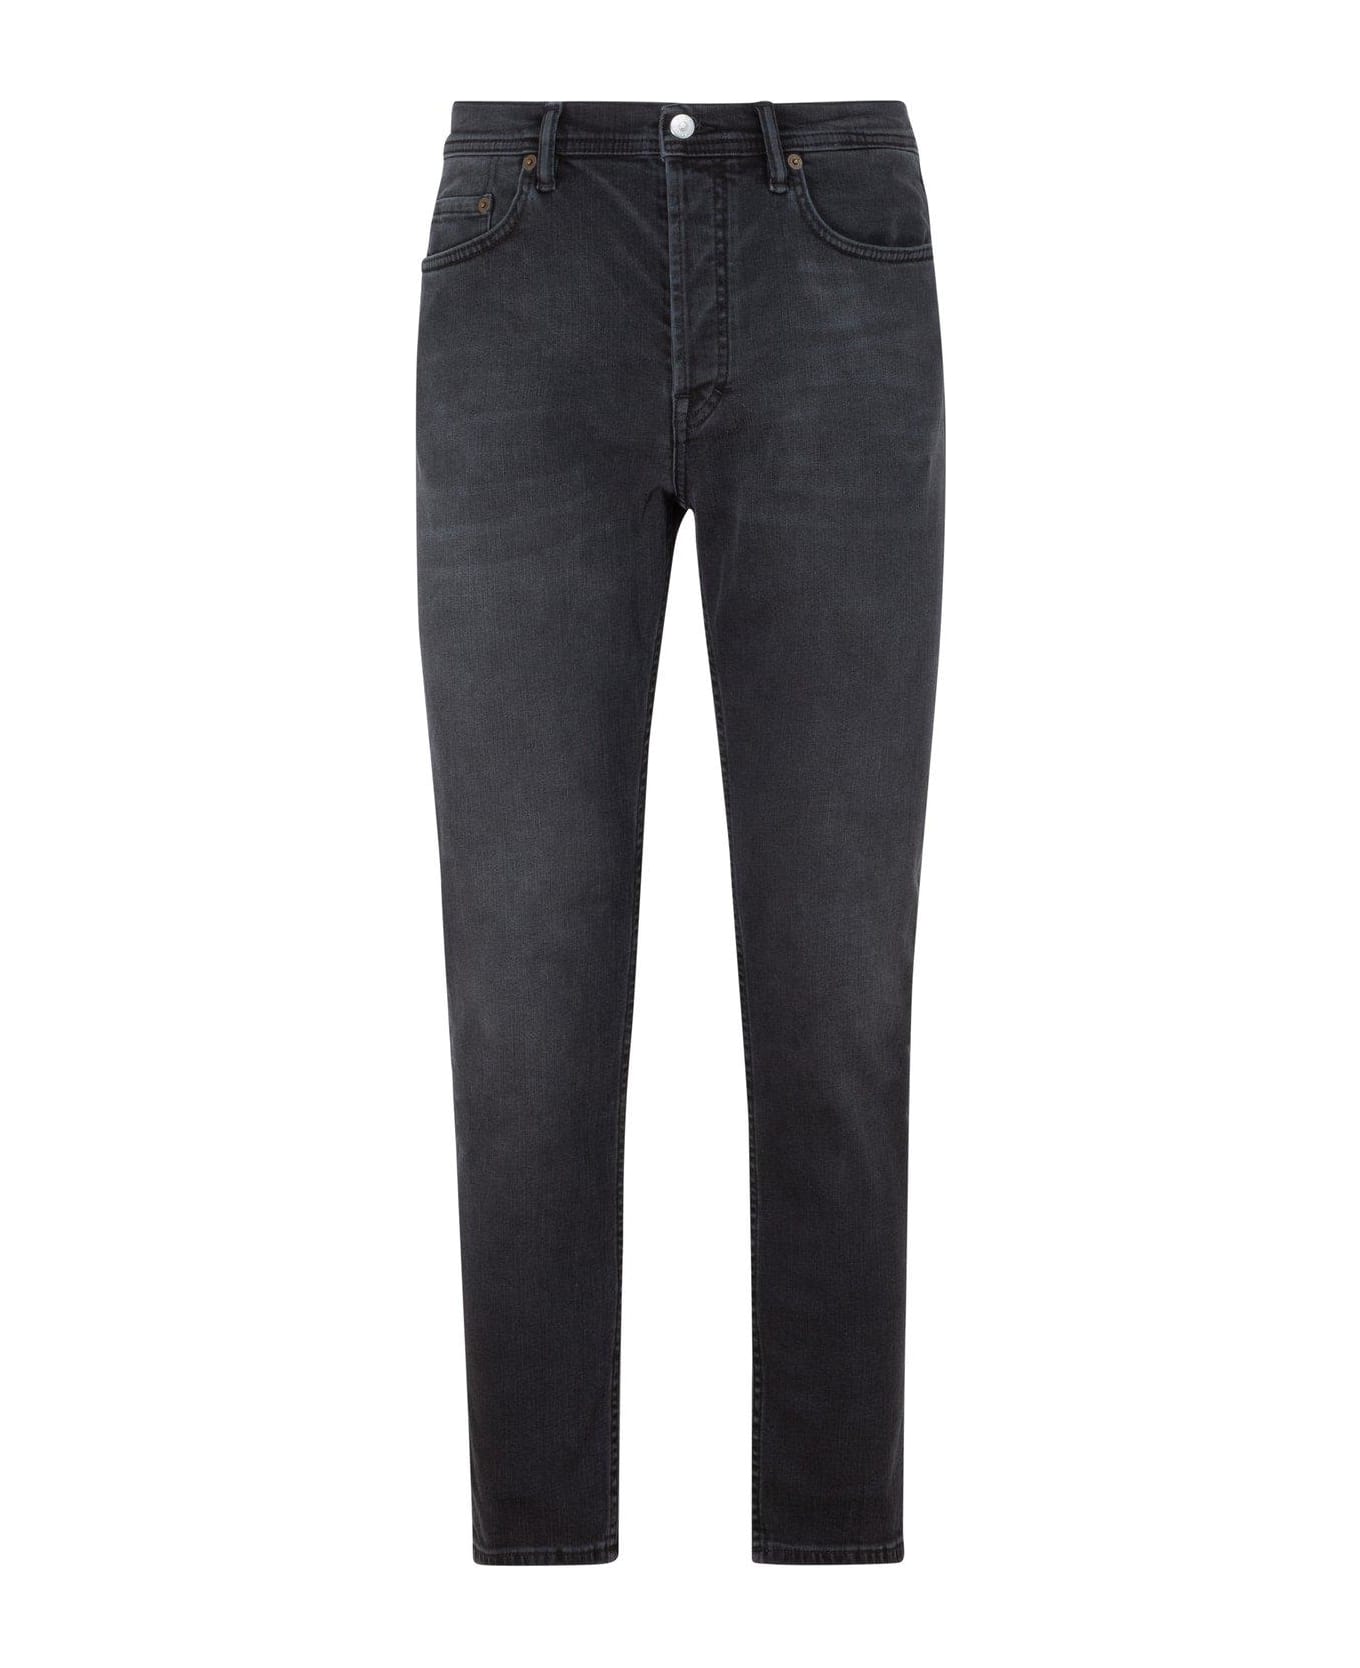 Acne Studios Slim Fit Jeans - AJC USED BLACK